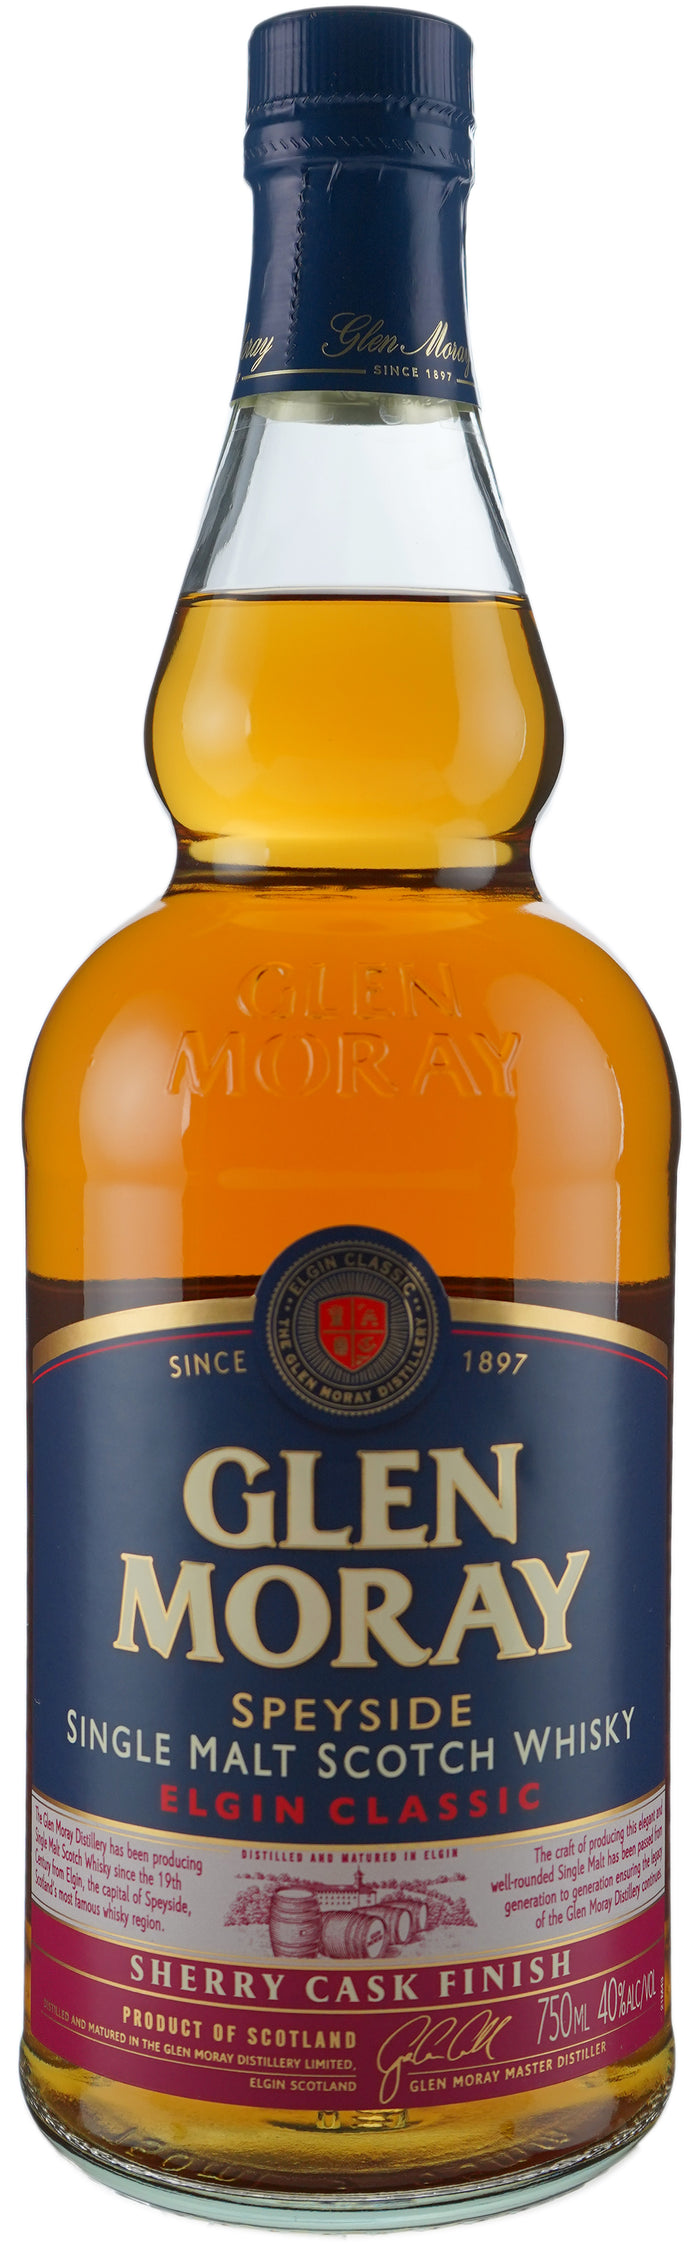 Glen Moray Elgin Classic Sherry Cask Finish Single Malt Scotch Whiskey